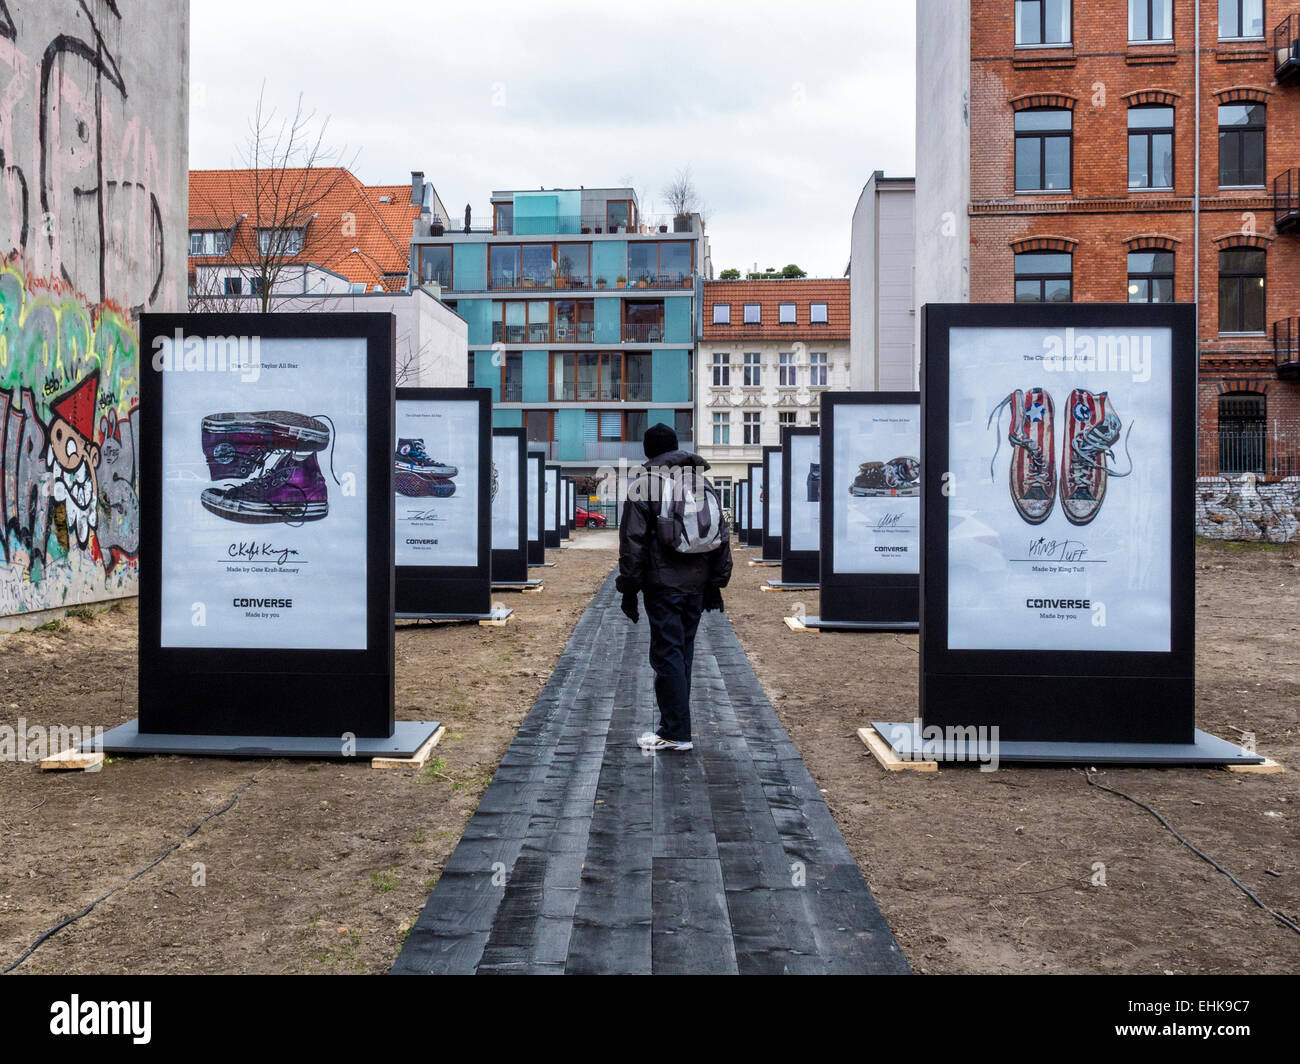 Berlin Converse Trainers Advertisement, Chucks shoes 